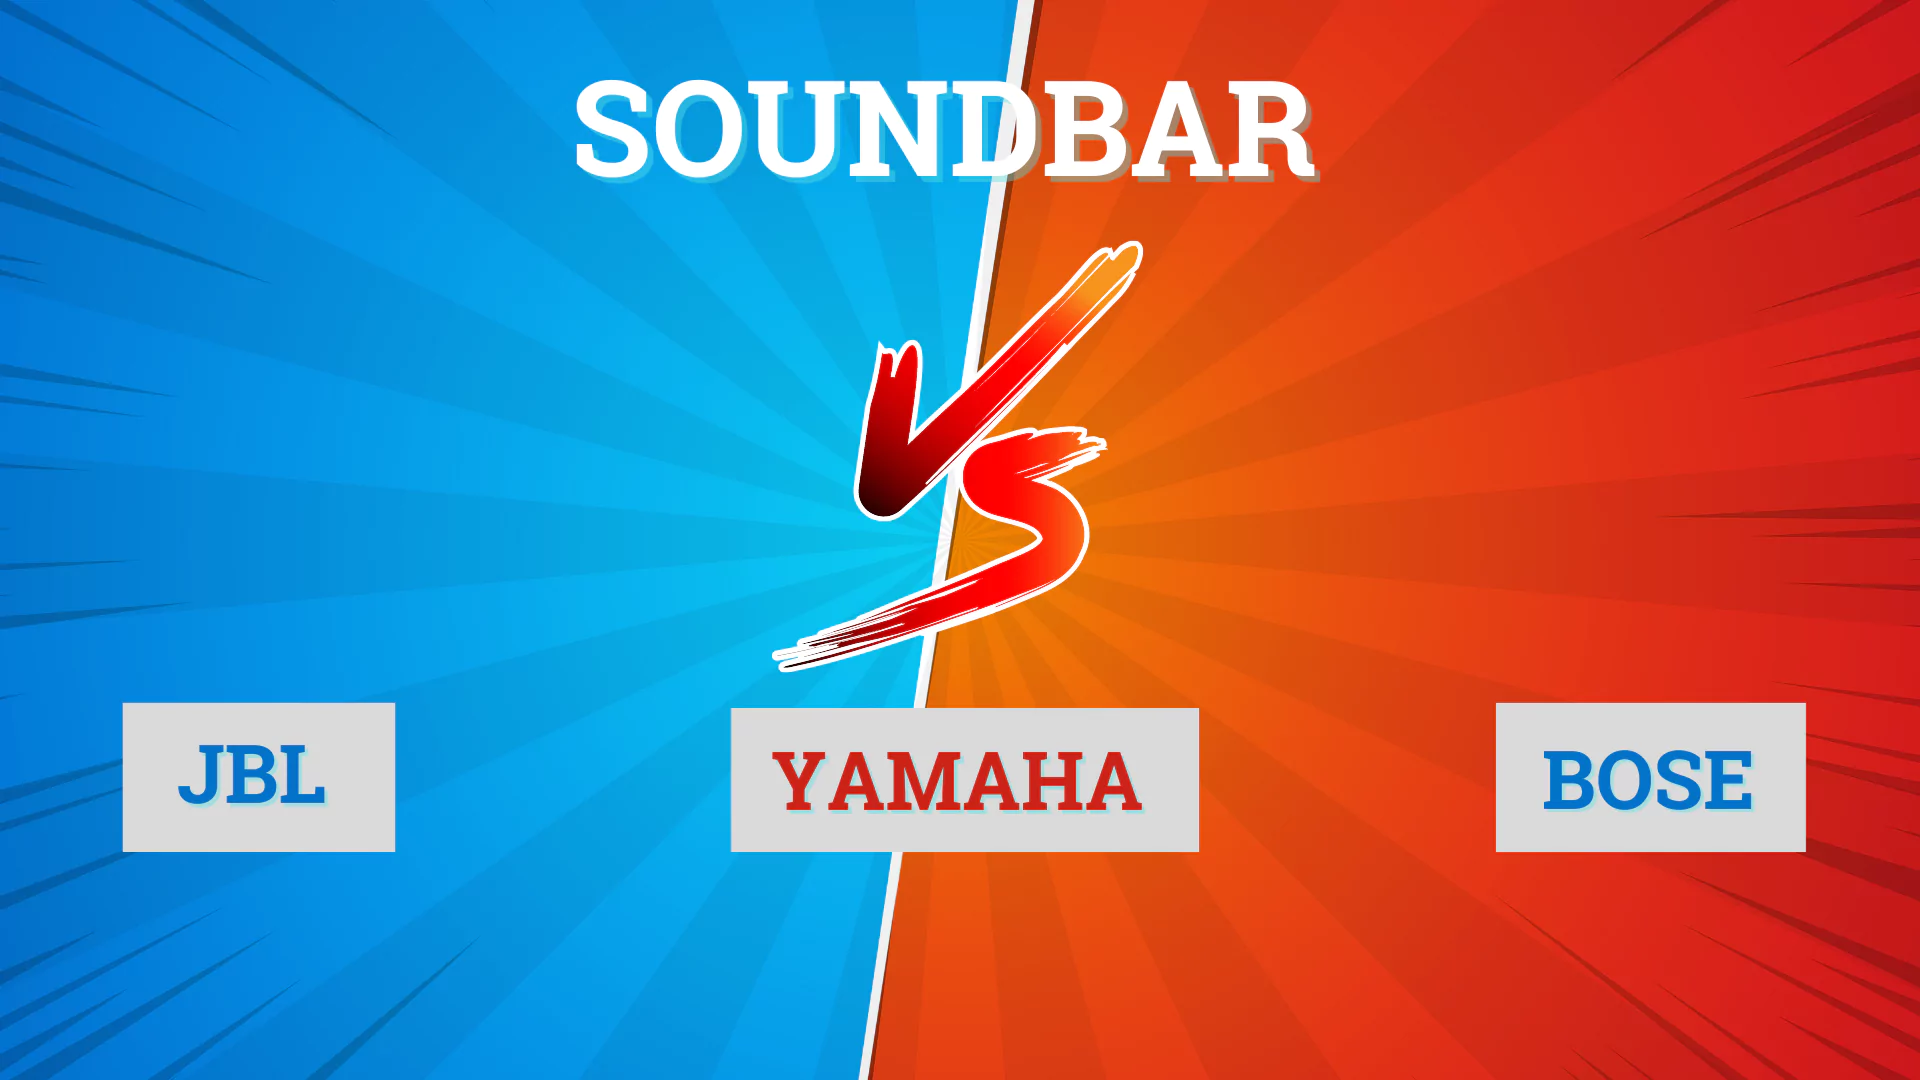 JBL vs Bose vs Yamaha Soundbar: Which Is Best?